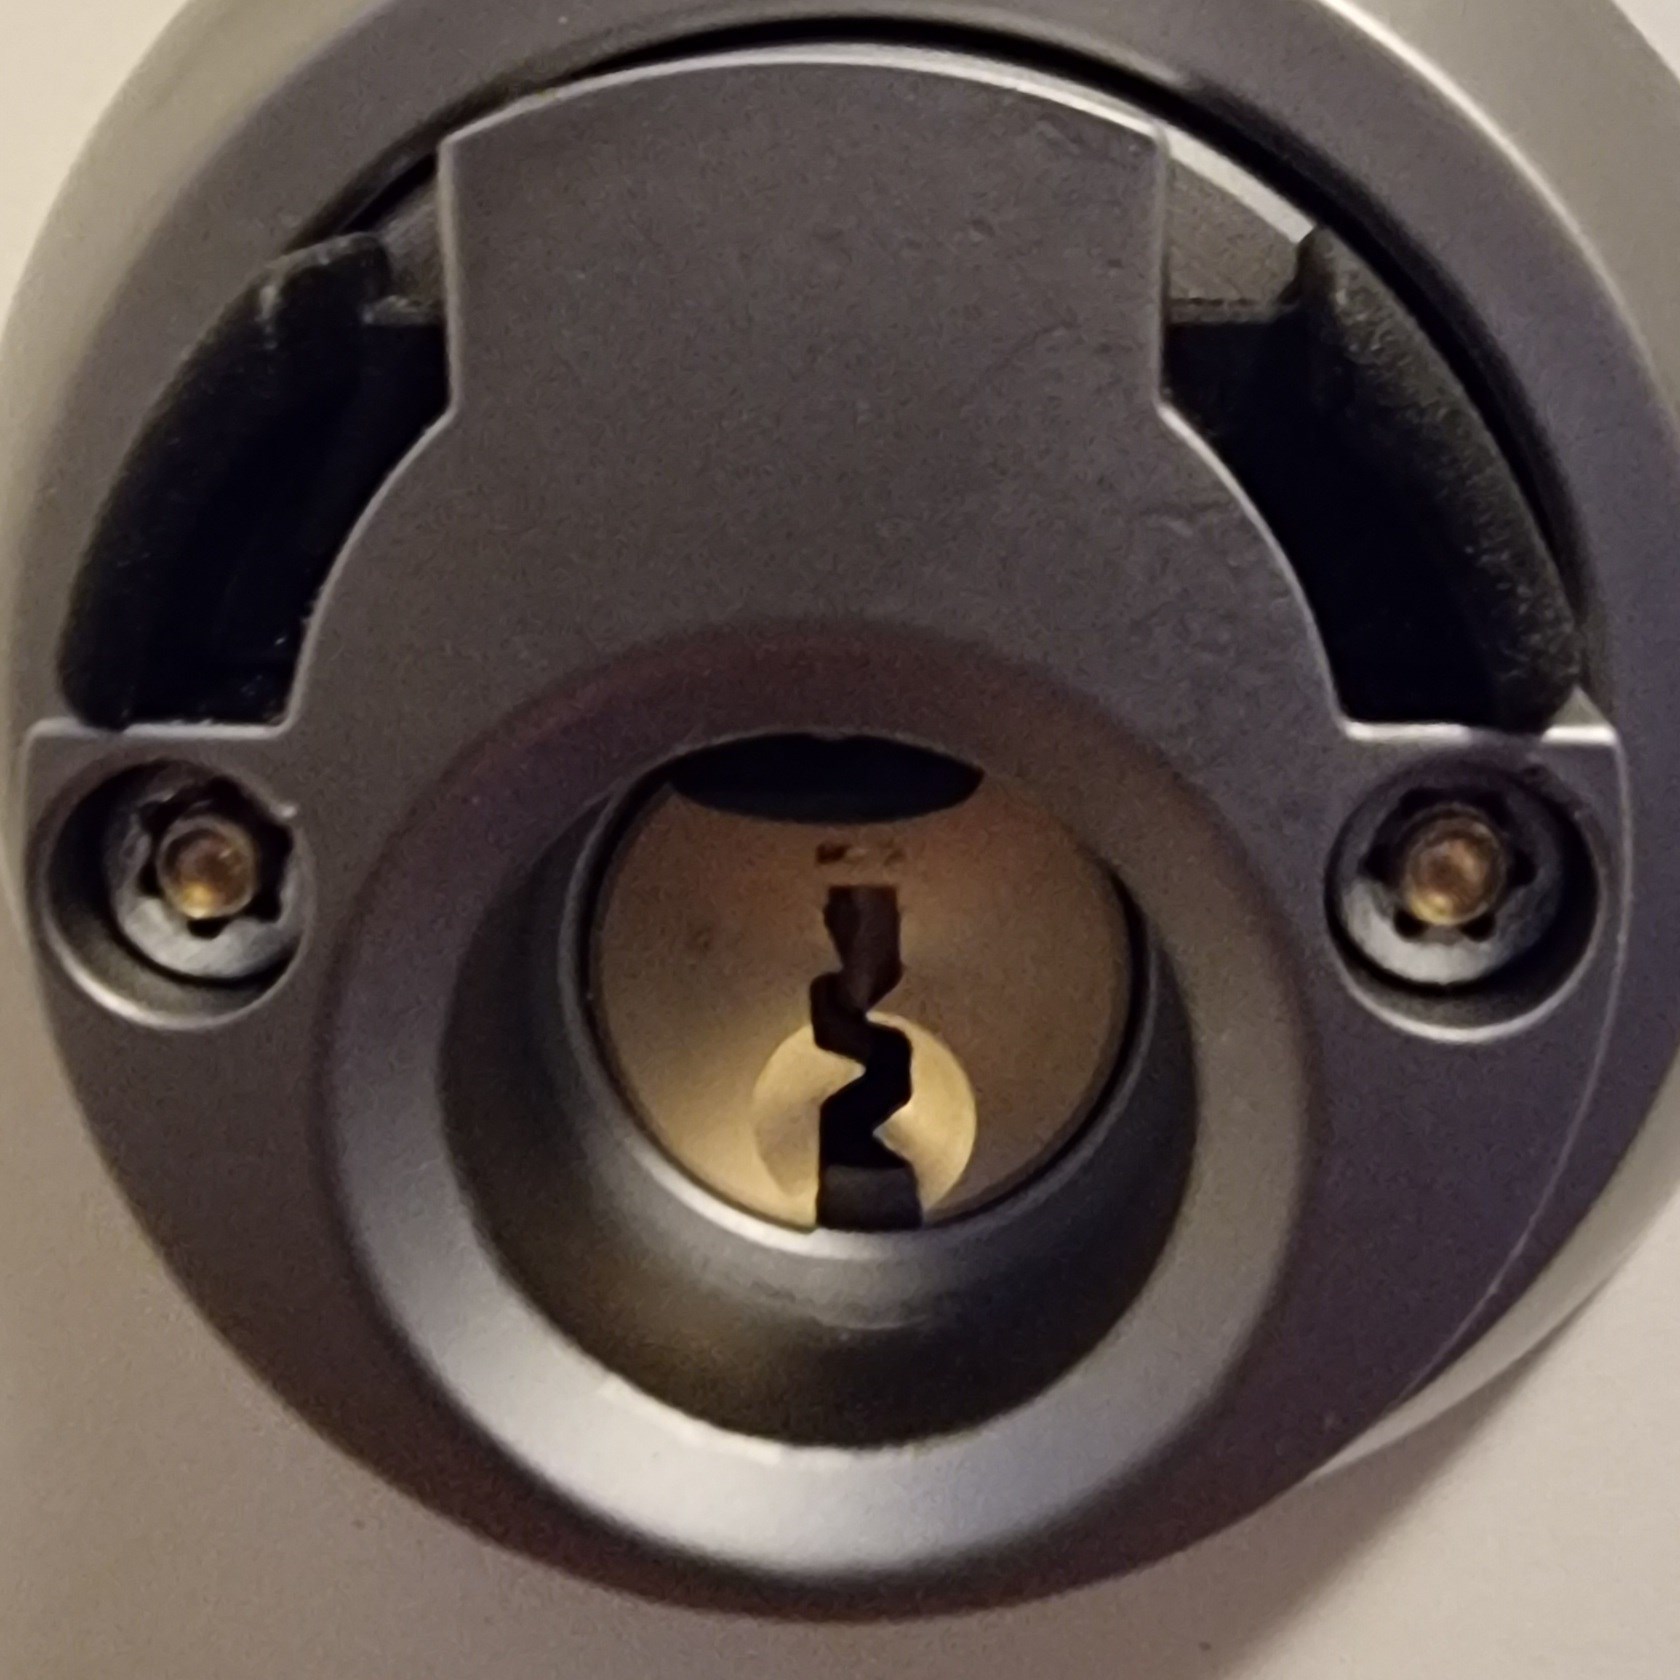 Hvordan demonterer jeg denne låsesylinderen? - låssylinder.jpg - JonB